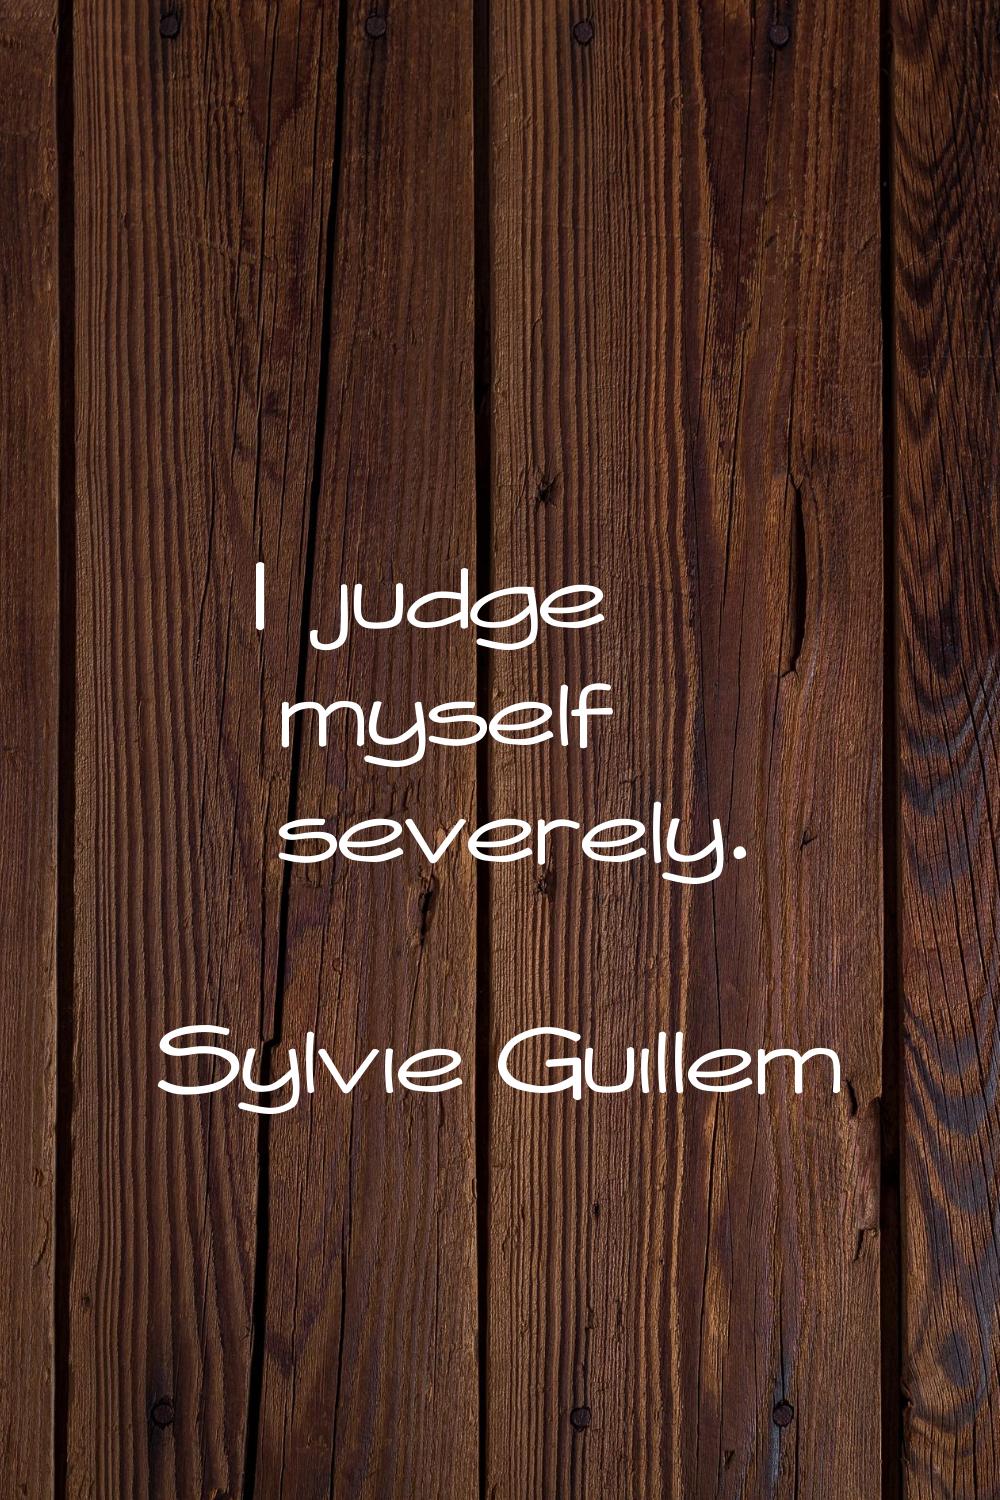 I judge myself severely.